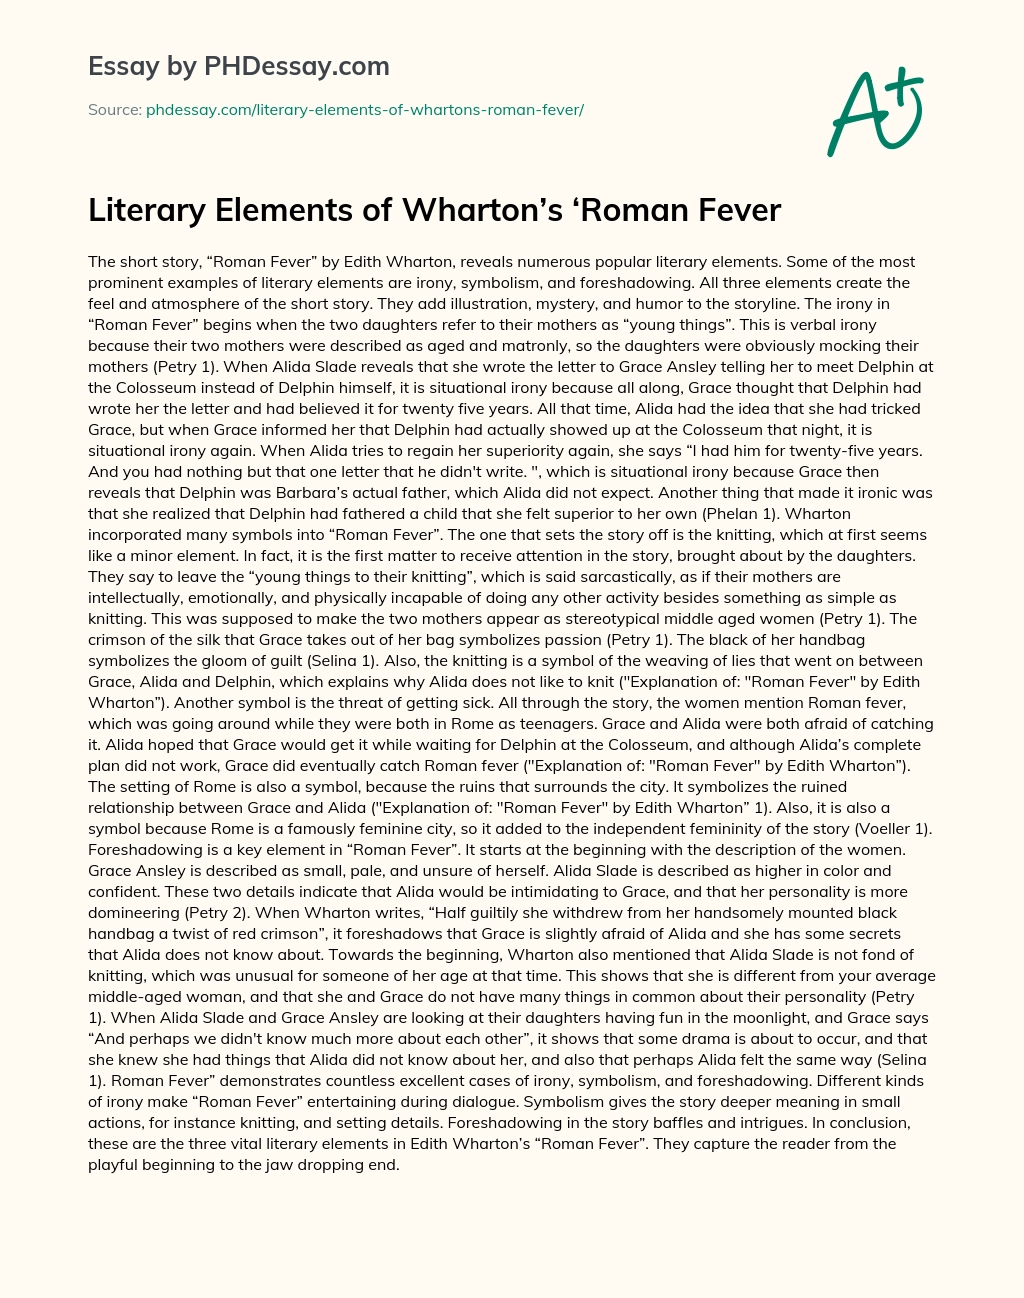 Literary Elements of Wharton’s ‘Roman Fever’ essay